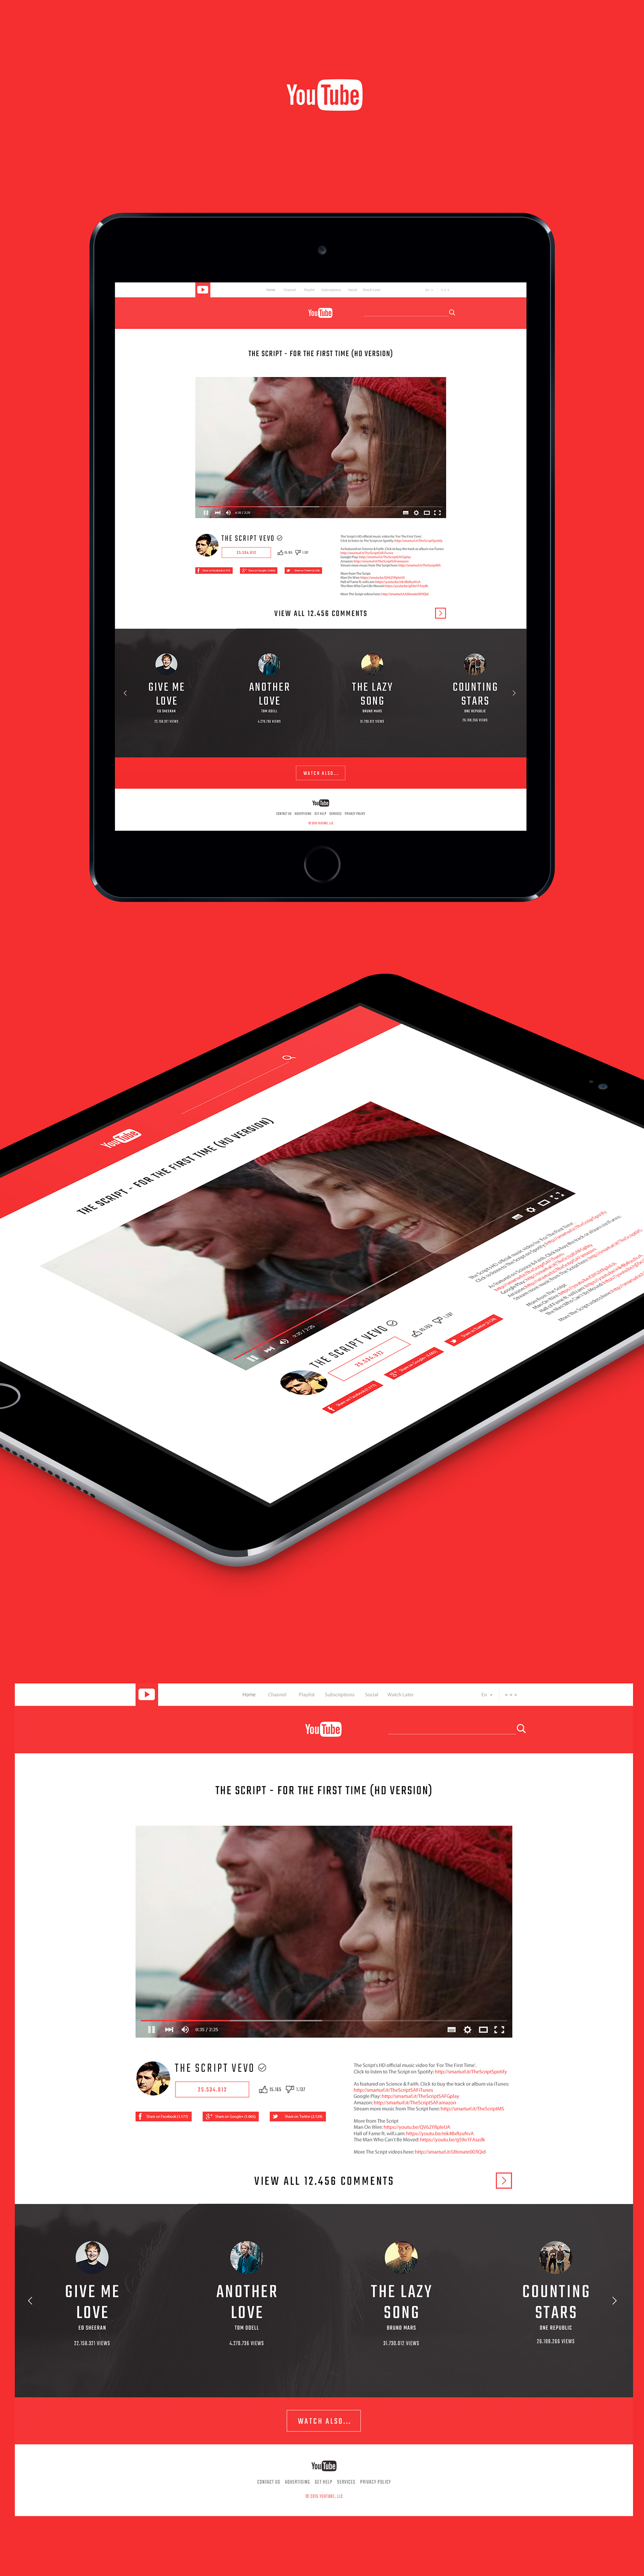 youtube vimeo video app redesign Mockup concept UI ux free red iPad apple